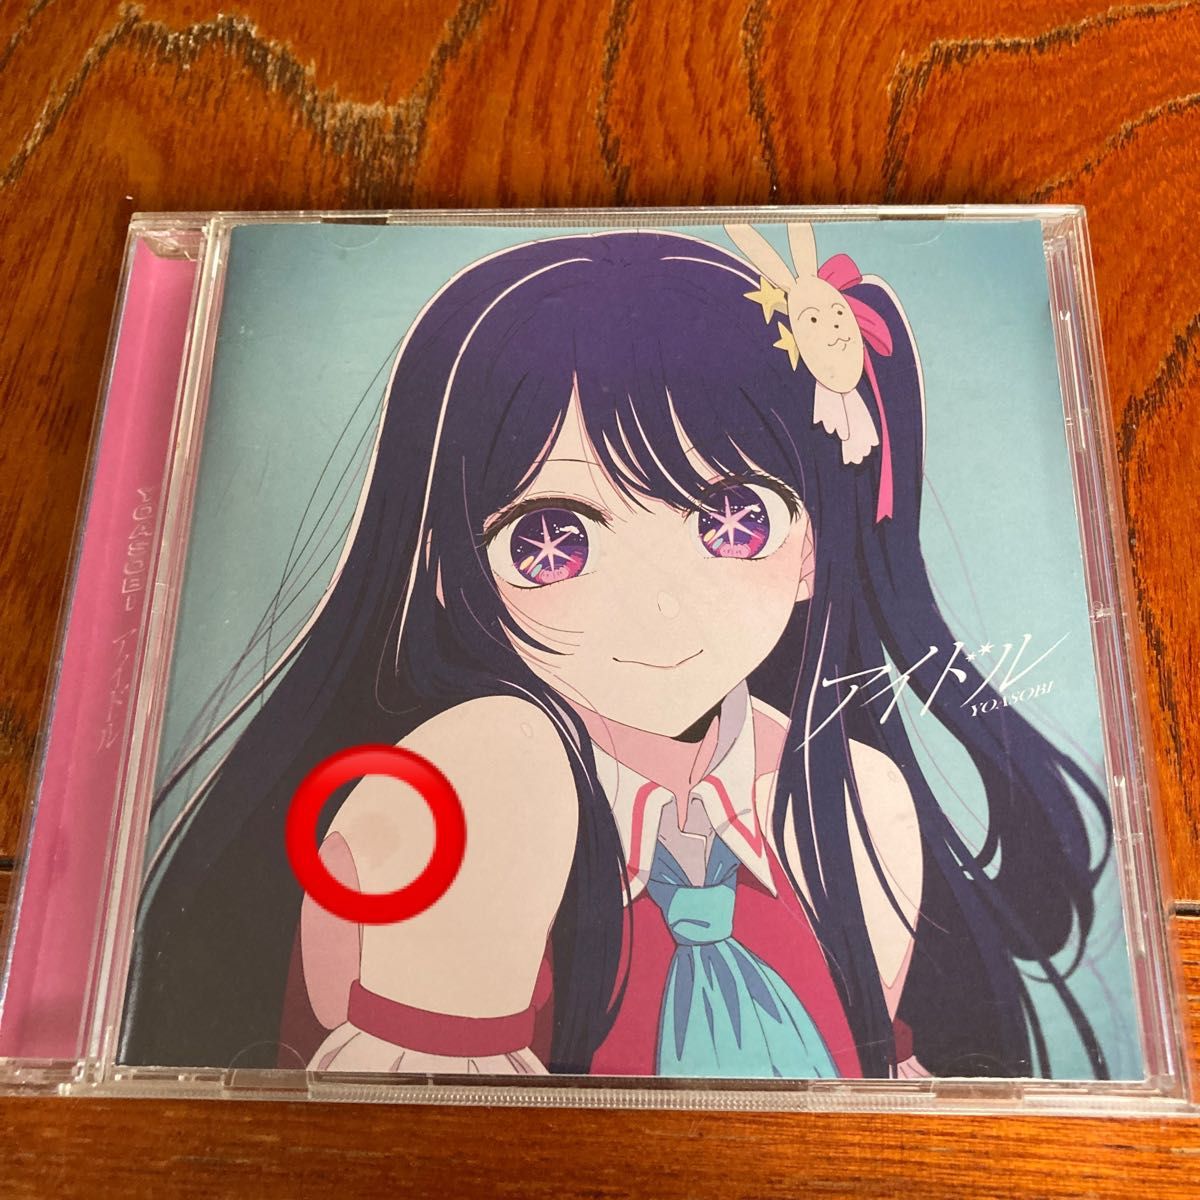 YOASOBI 推しの子 アイドル CD レンタル品